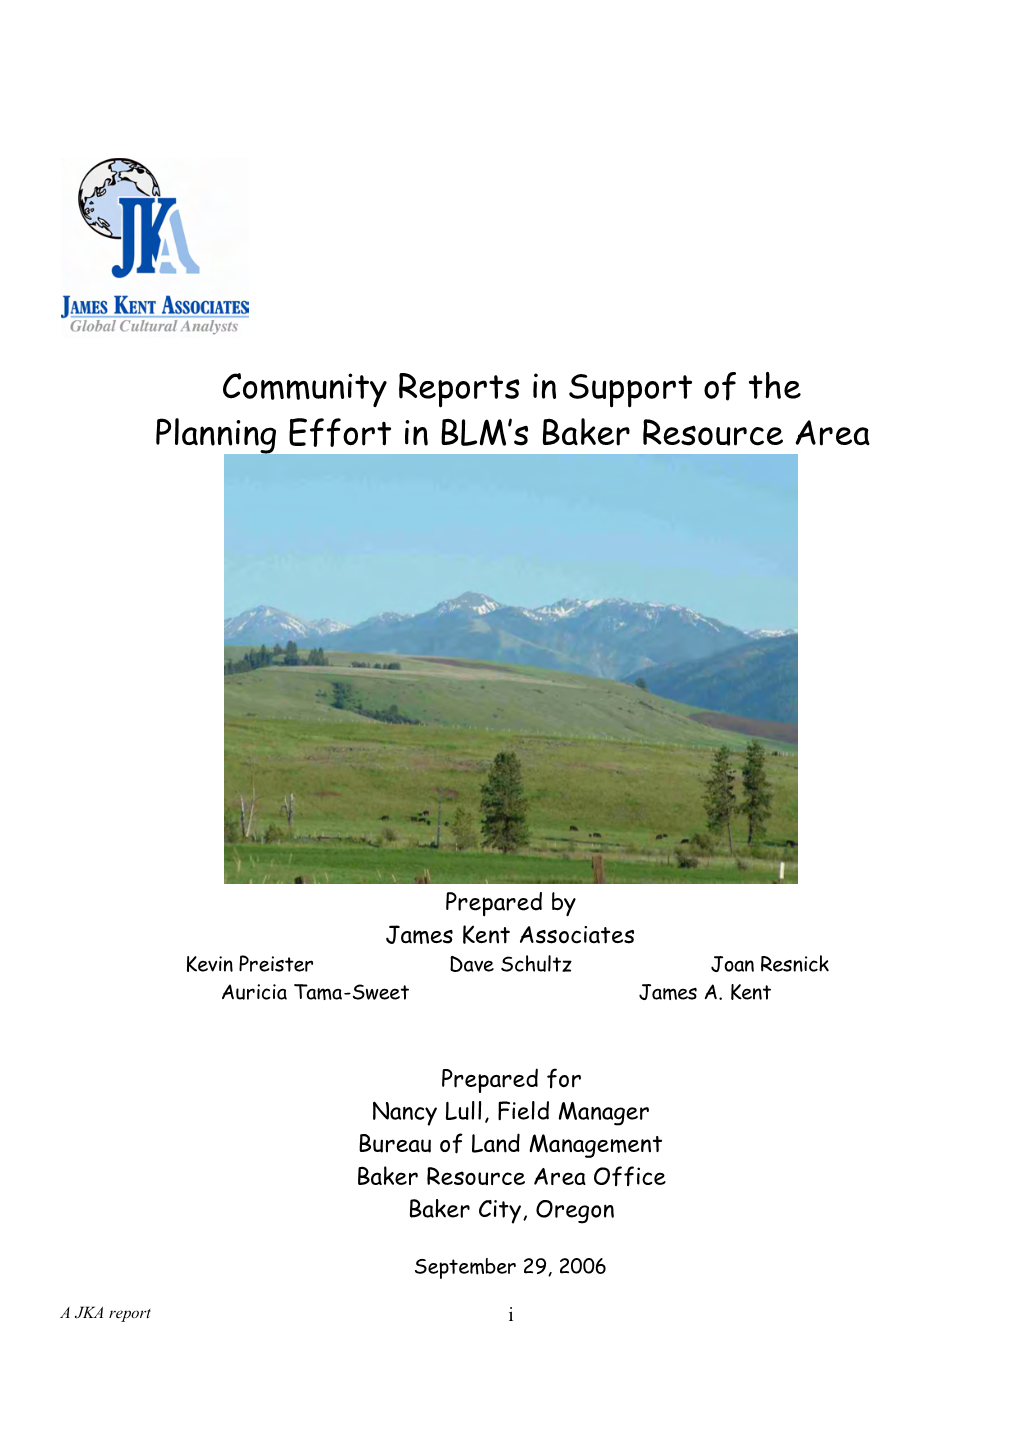 Community Assessment in the Baker Resource Area, Baker City, Oregon